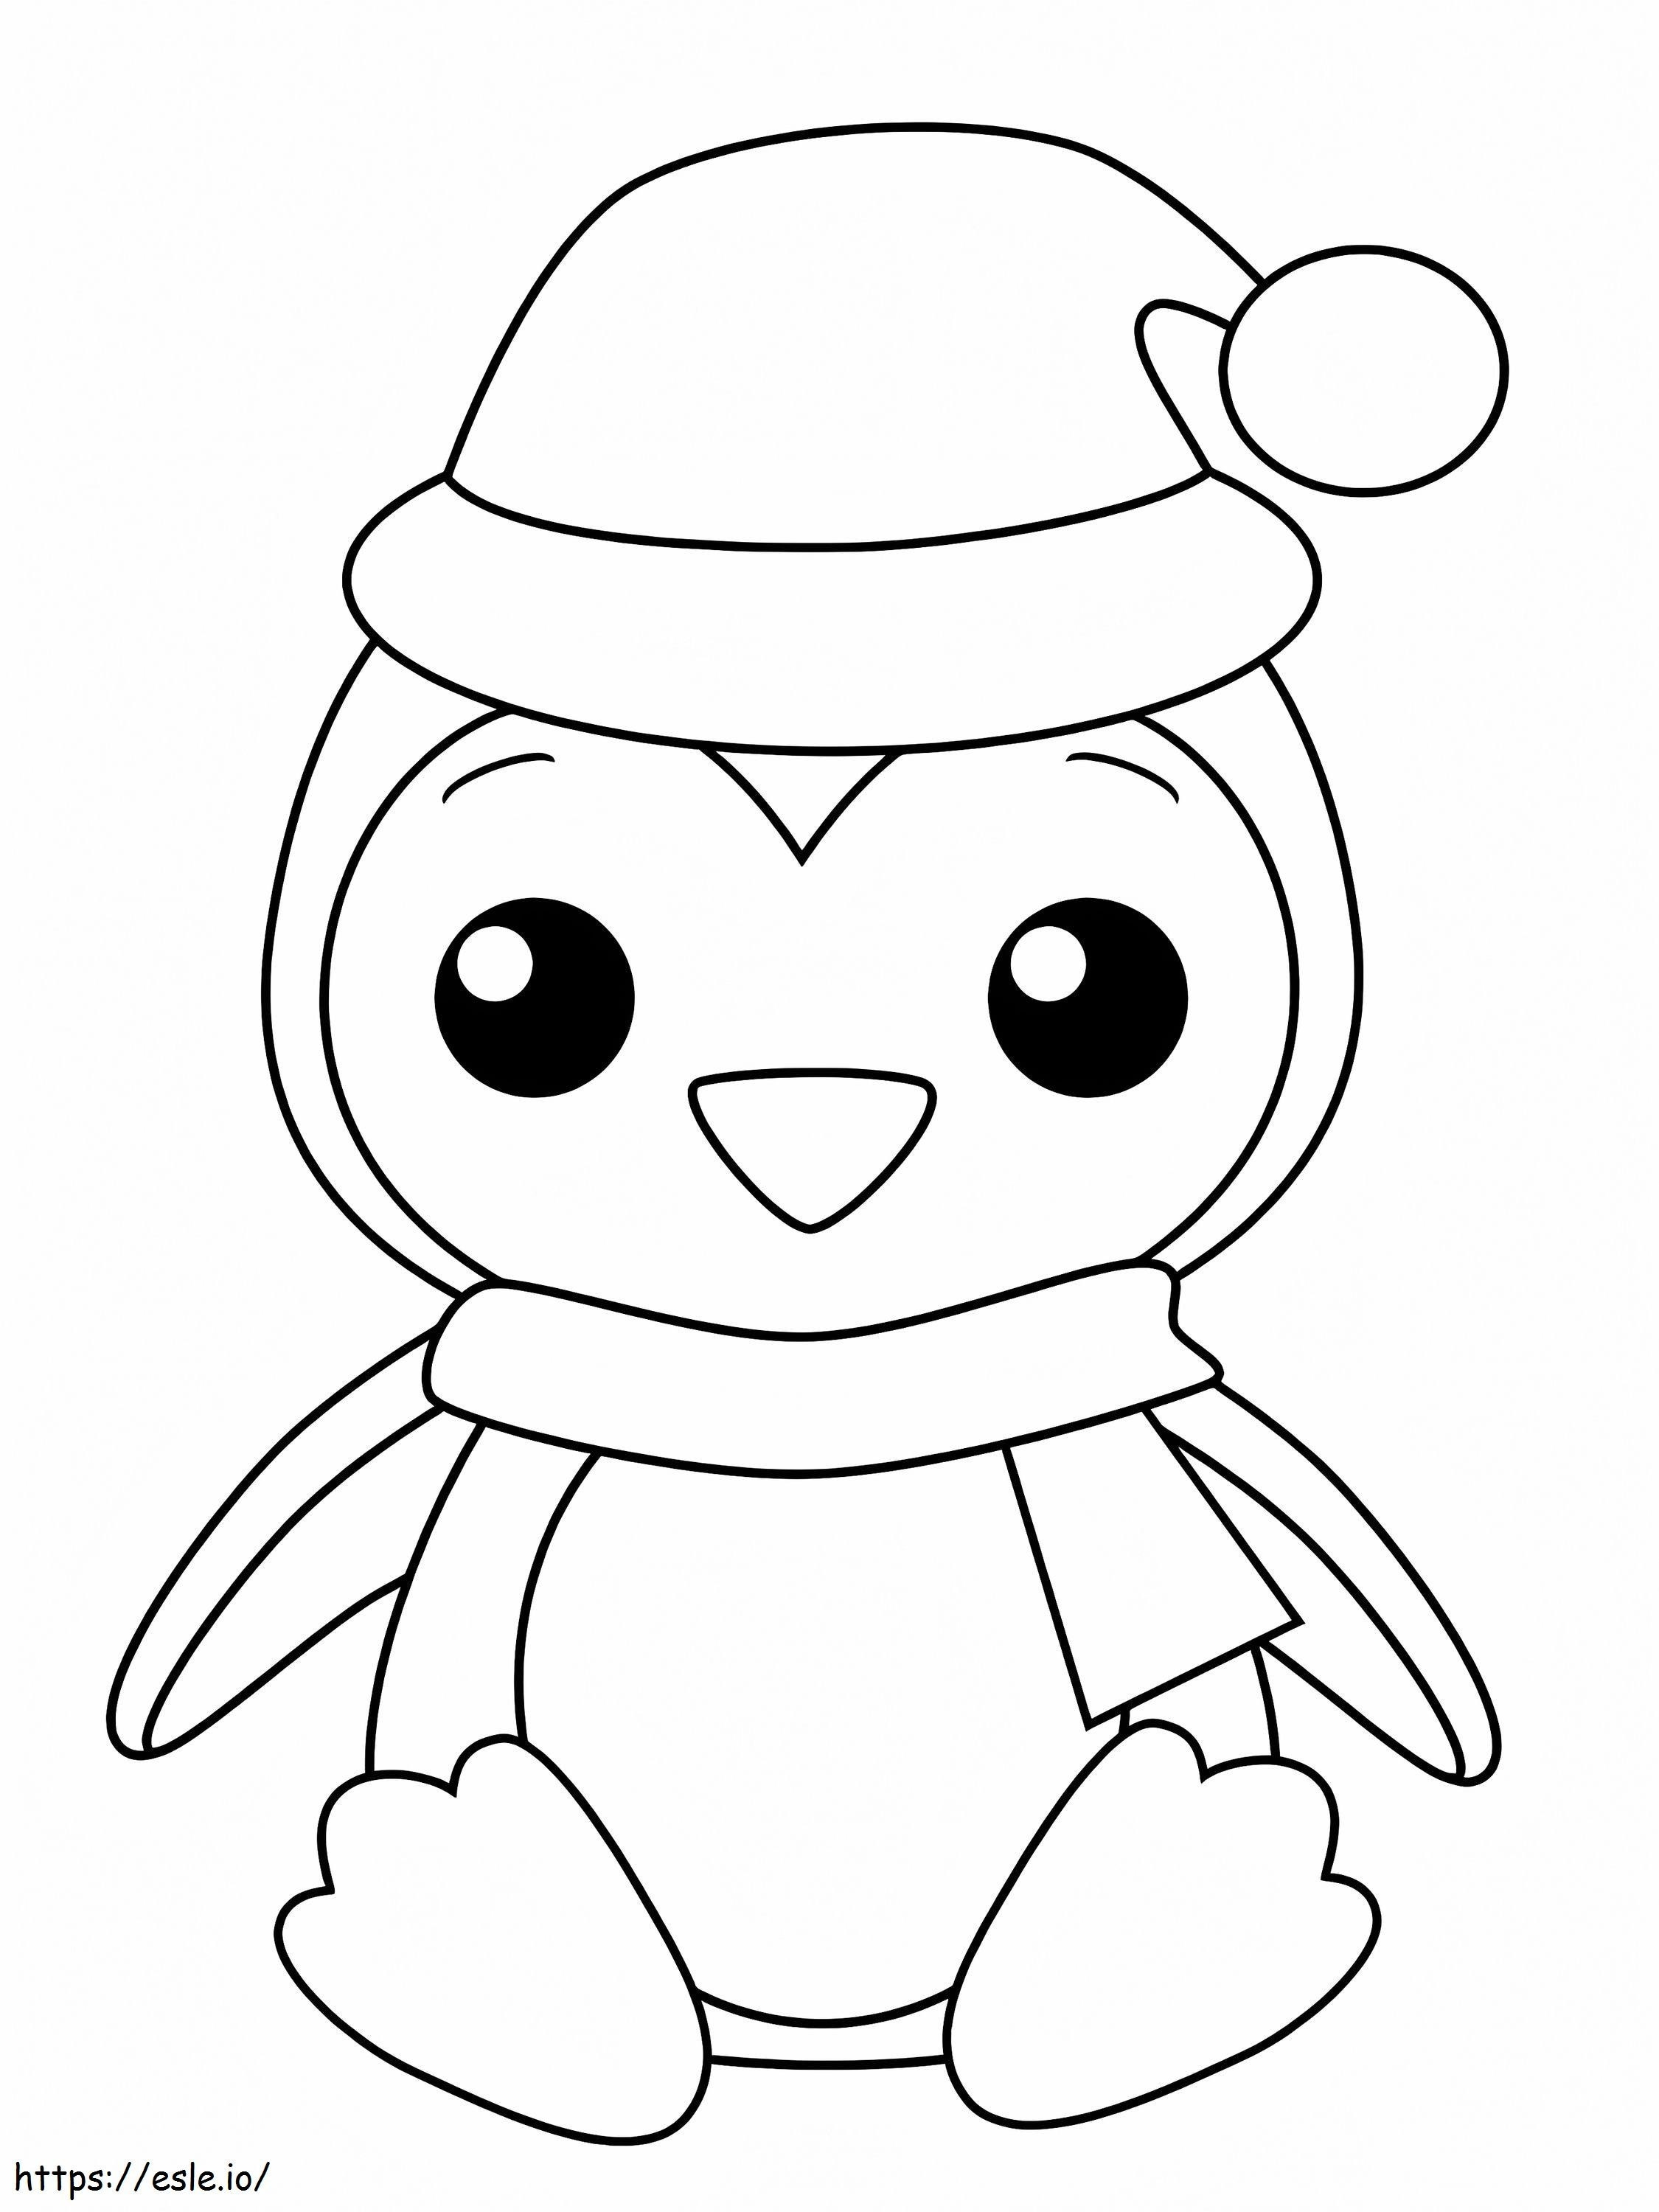 Pinguim com chapéu de Papai Noel para colorir